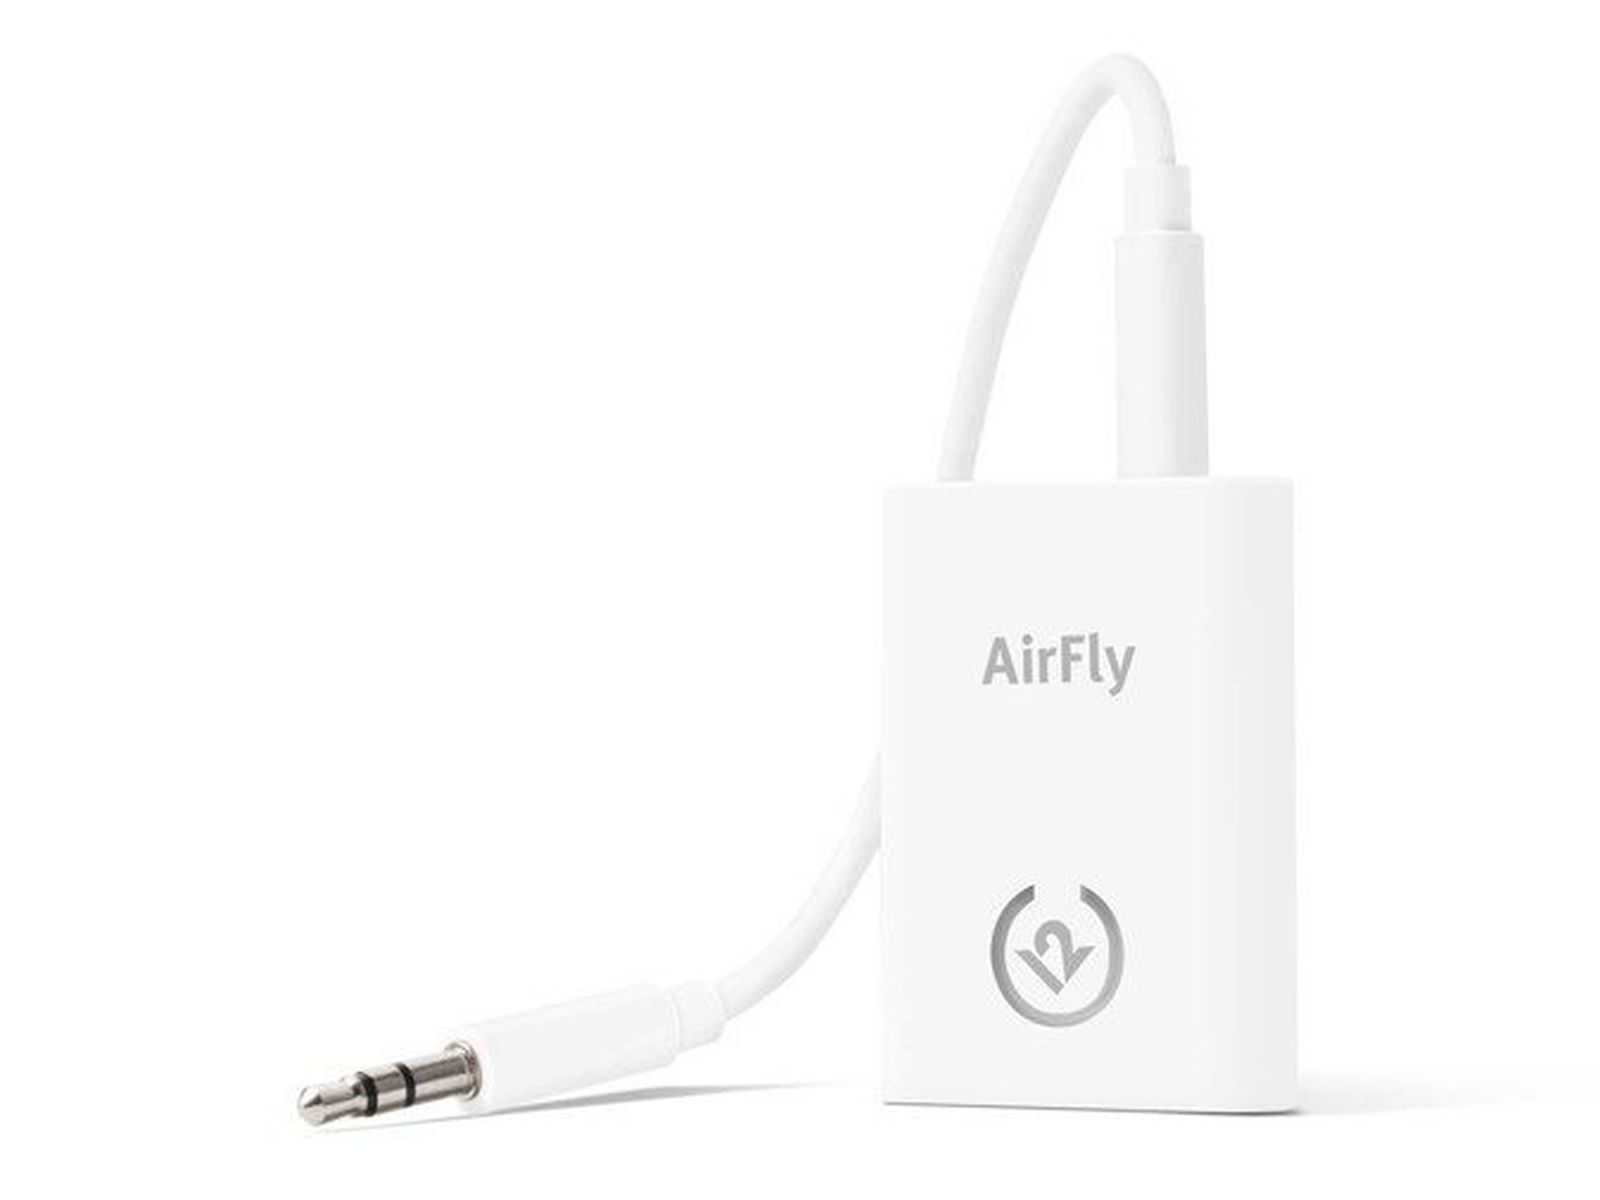 TwelveSouth's AirFly Pro wireless headphone jack adapter now